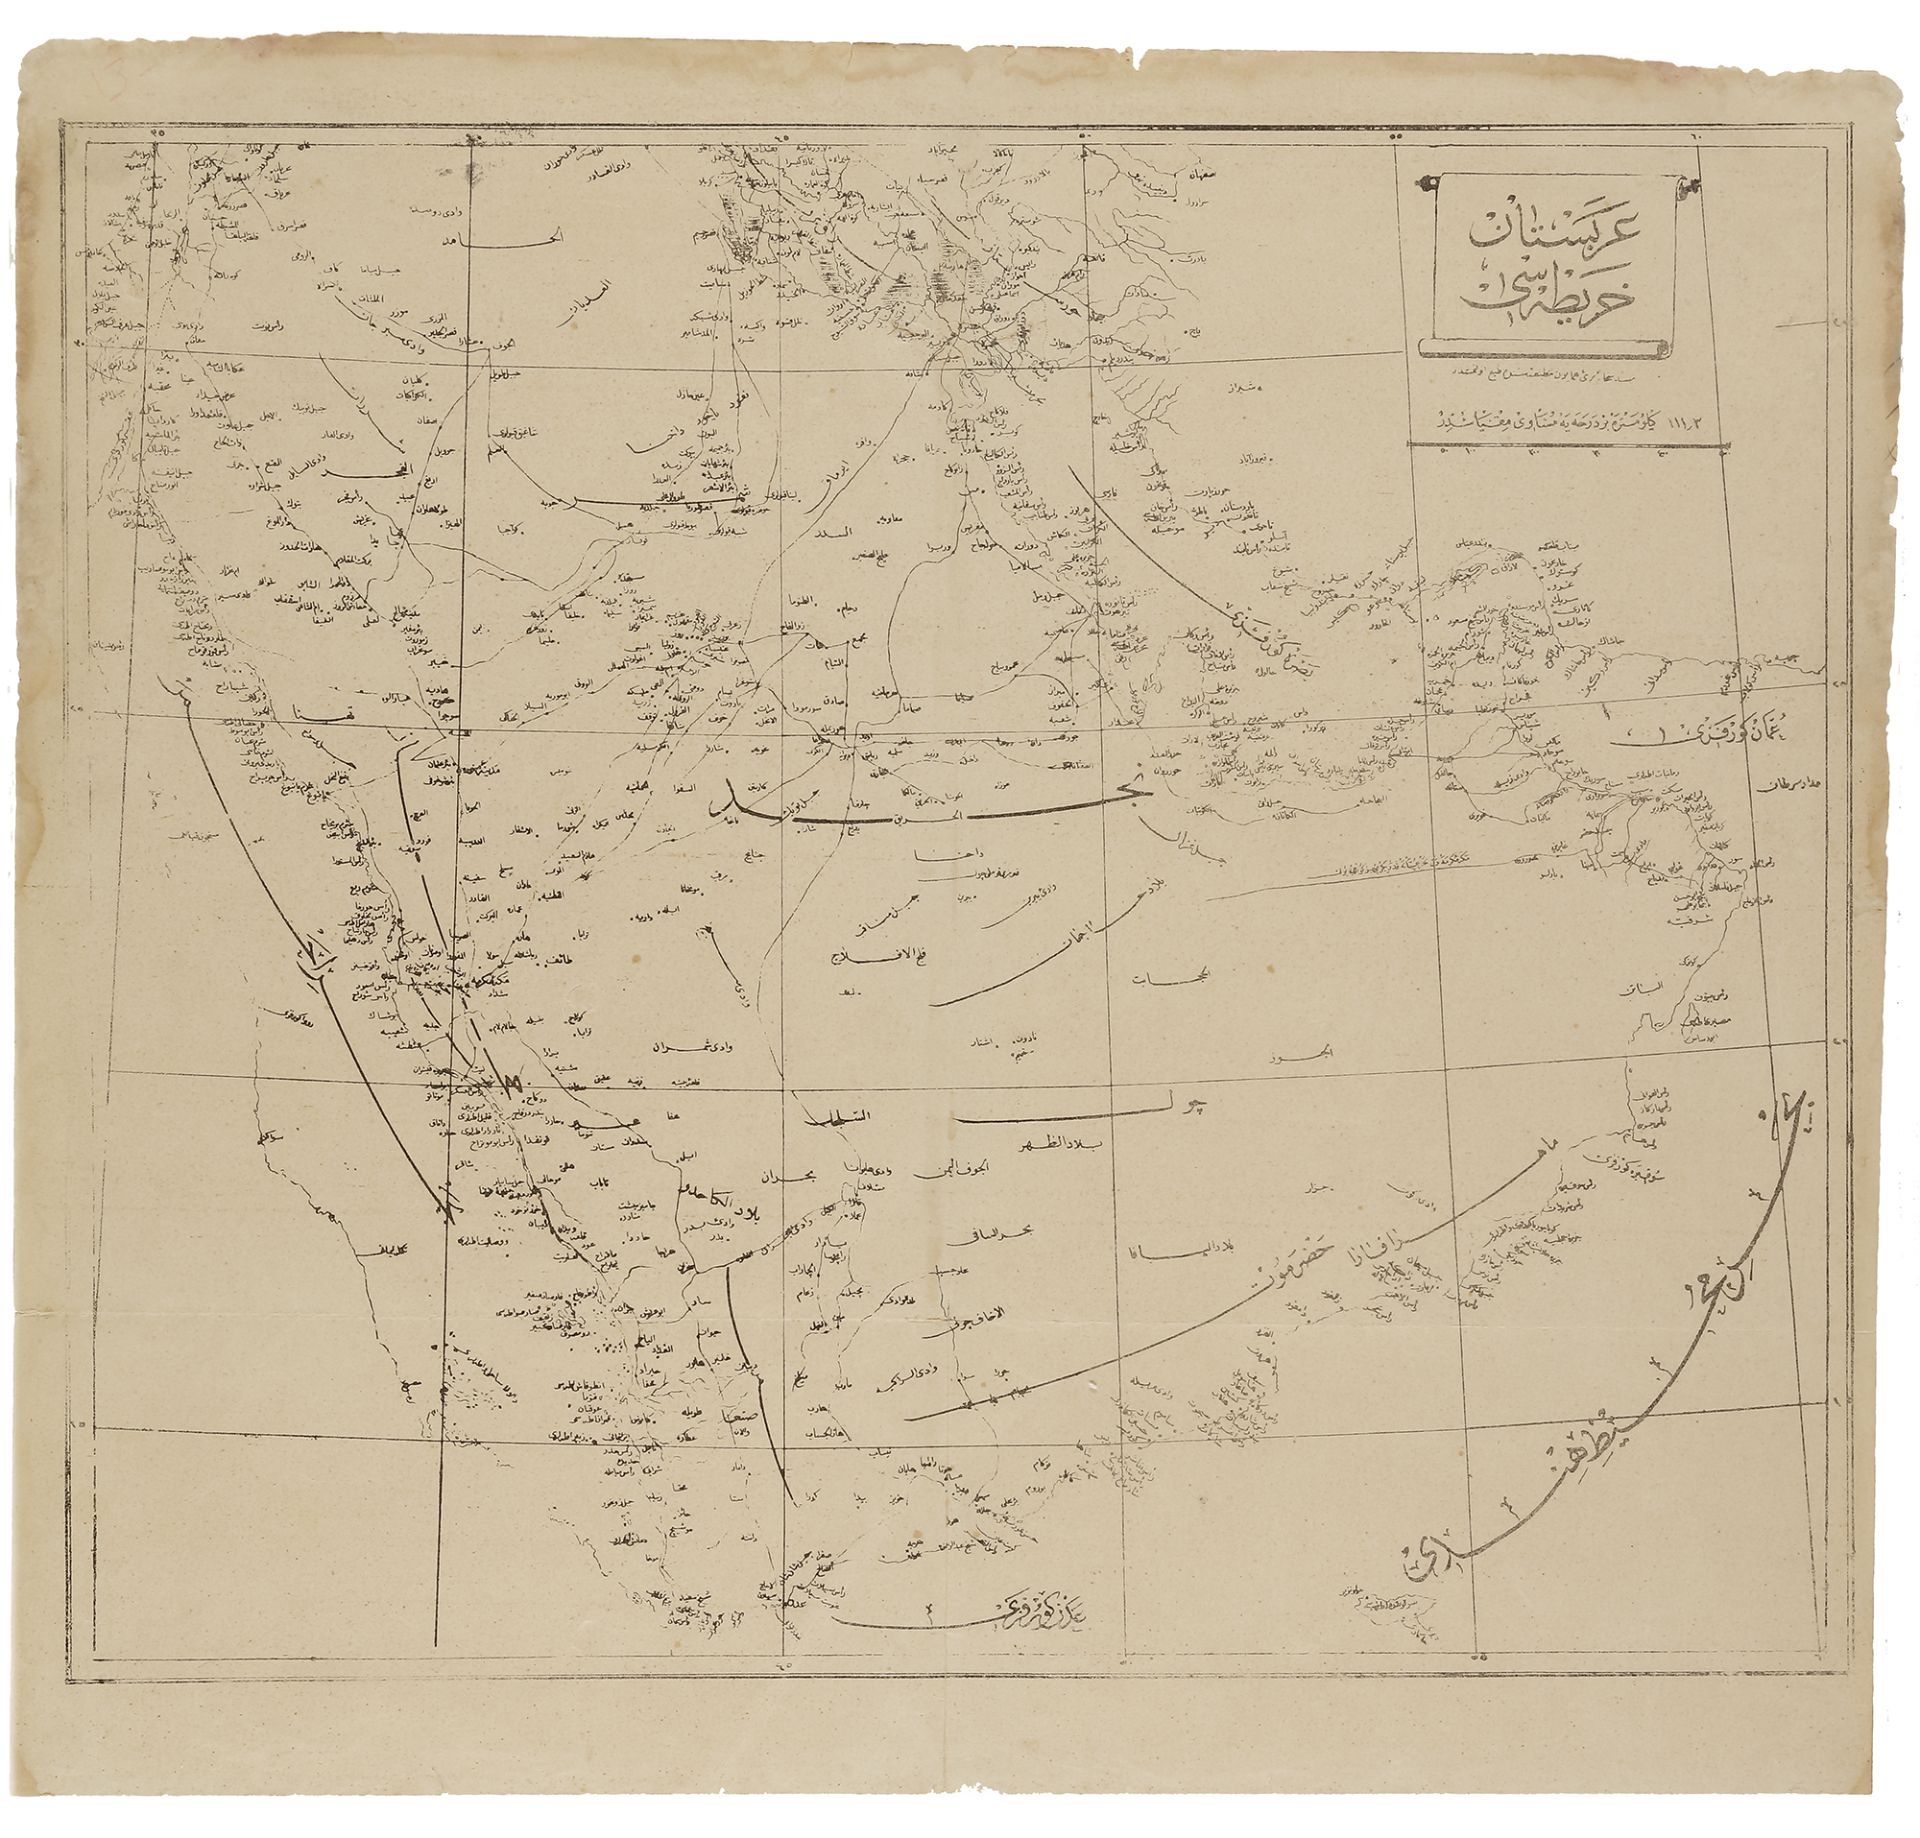 THREE RARE MAPS OF THE ARABIAN PENINSULA BY THE SURVEYOR ‘YEMENI’ BETWEEN 1850s TO 1860s, PRINTED BY